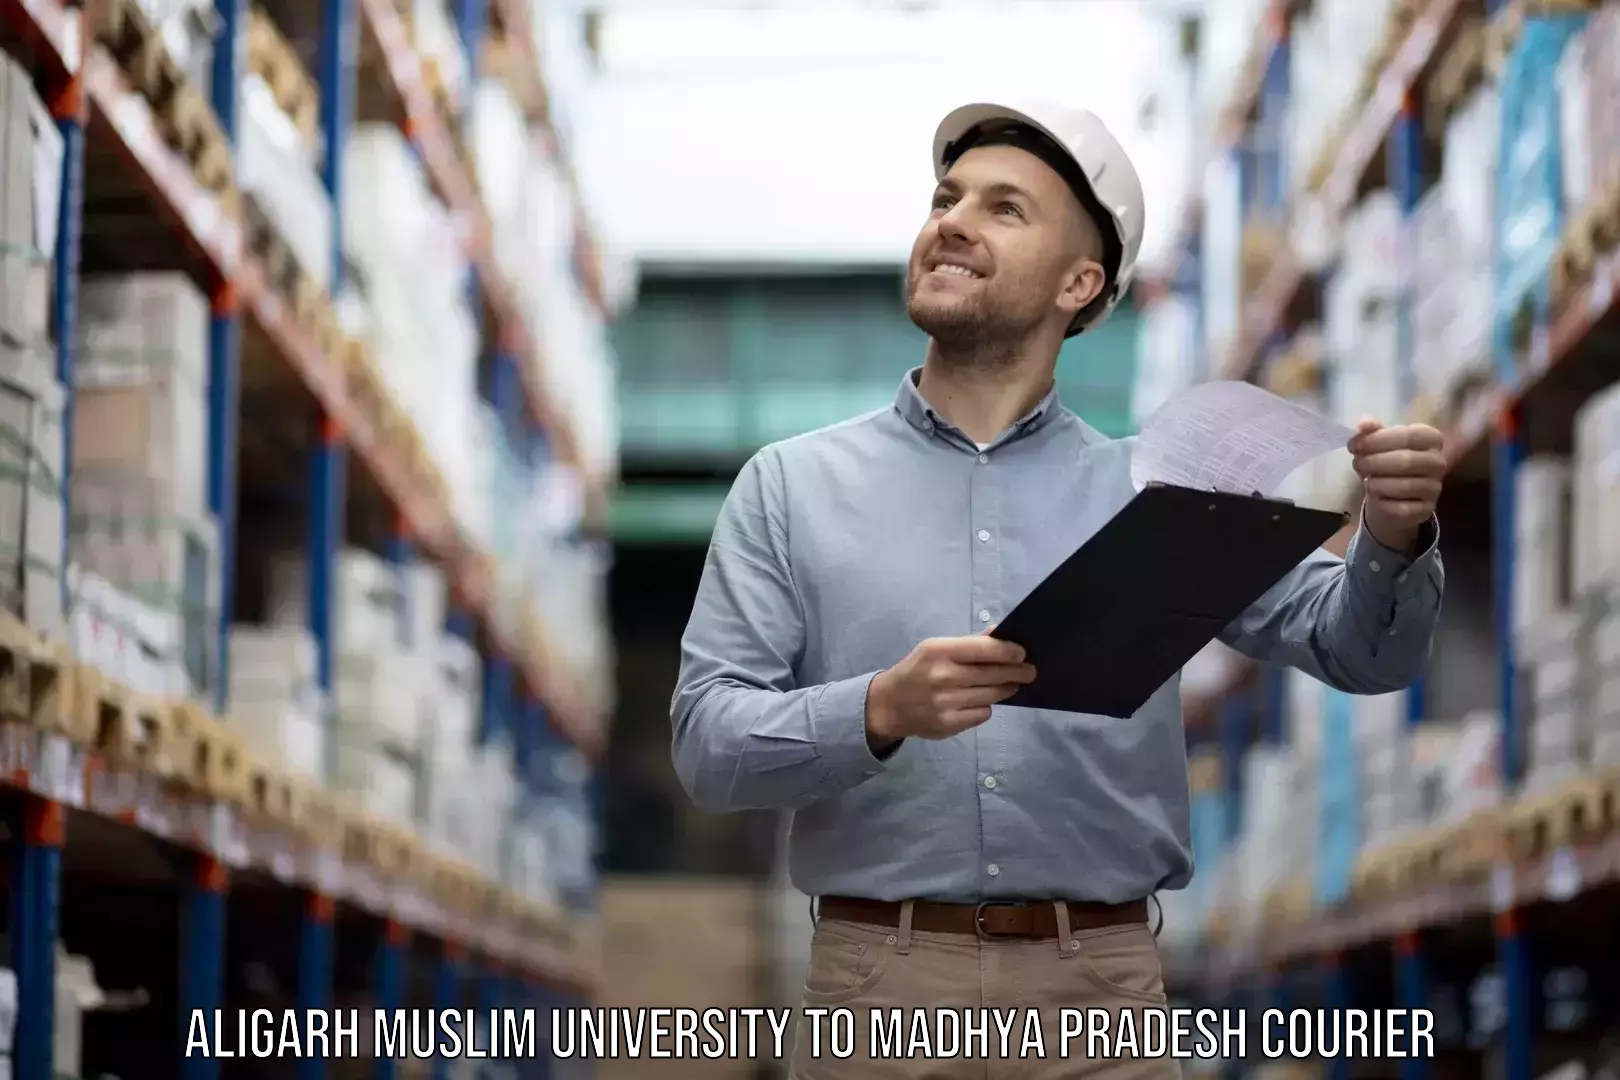 Expert goods movers Aligarh Muslim University to Indore